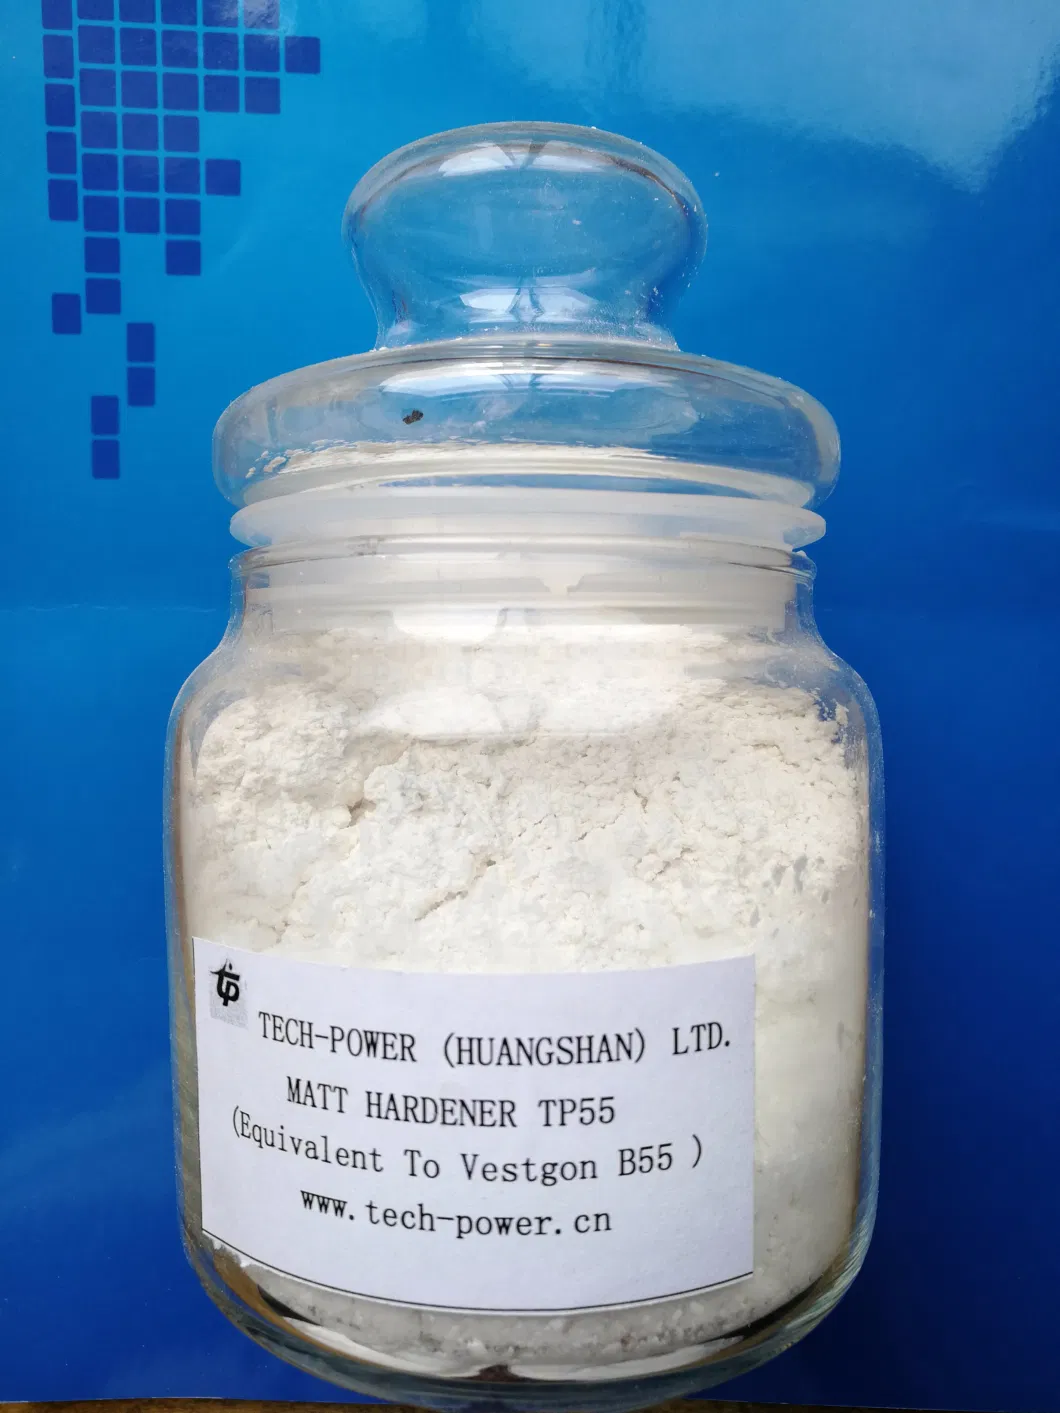 Composed Salt of Cyclic Amidine and Multi-Acid for Matt Hardener Tp55